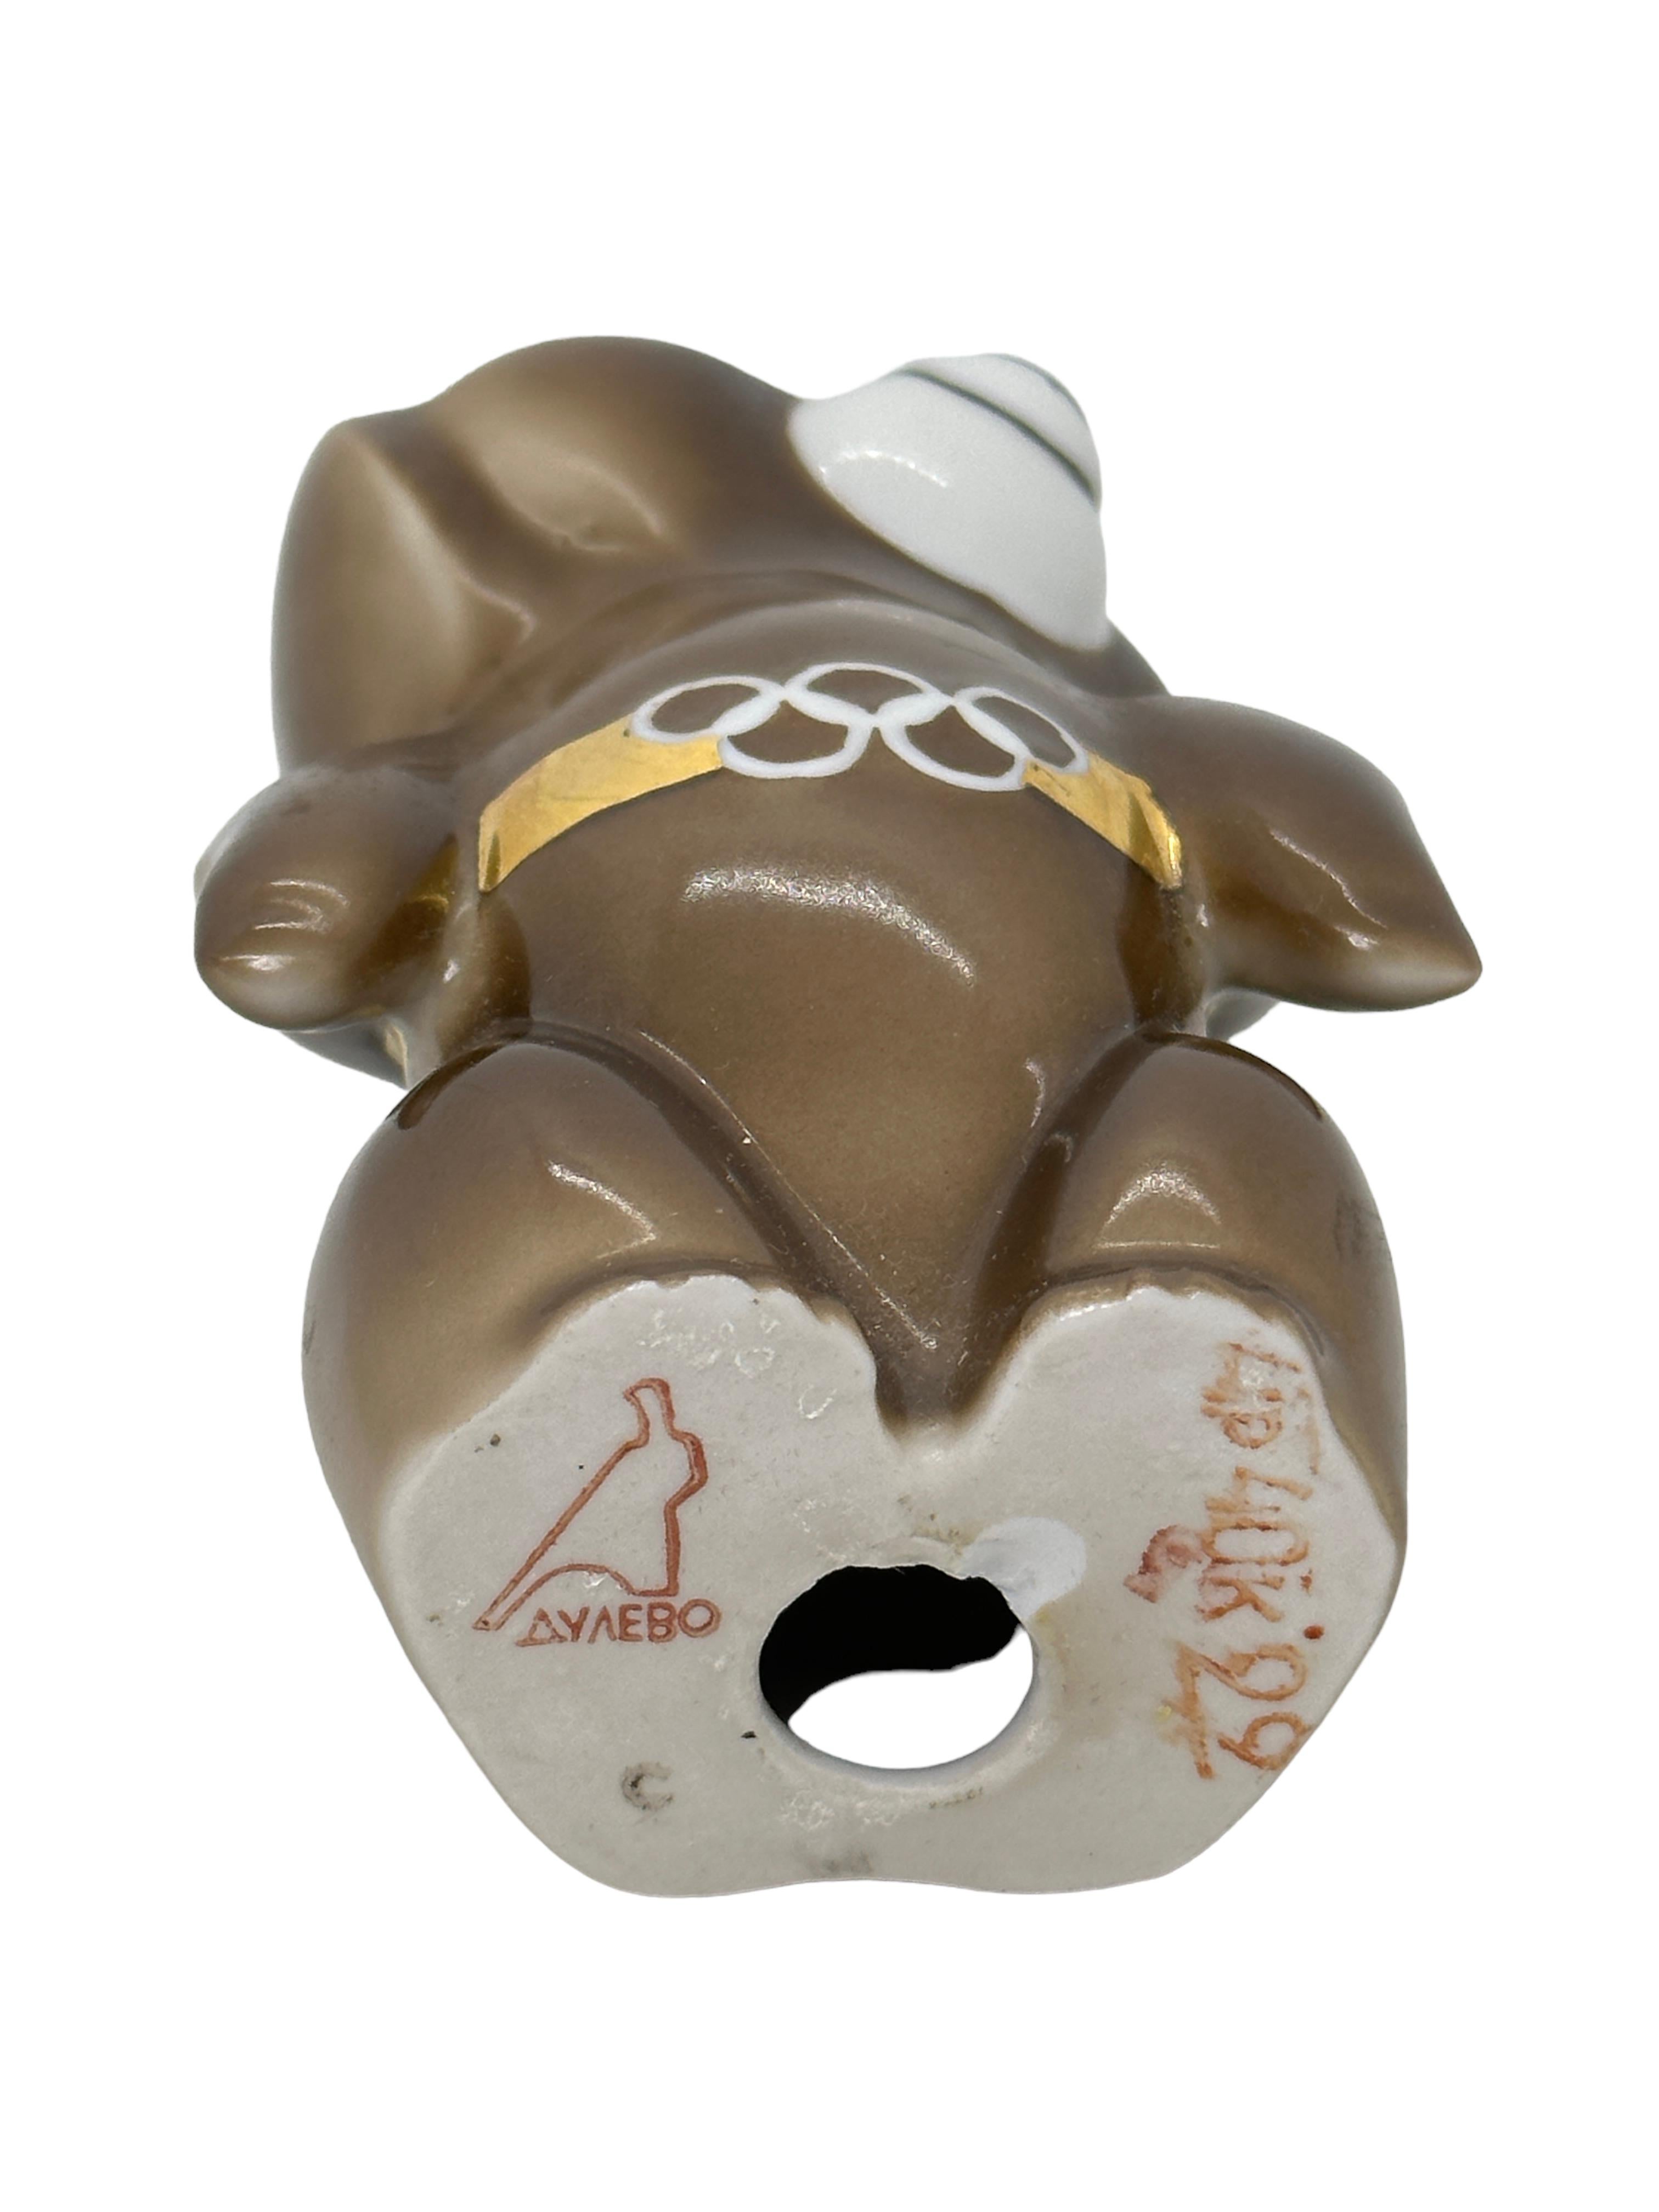 moscow olympics mascot